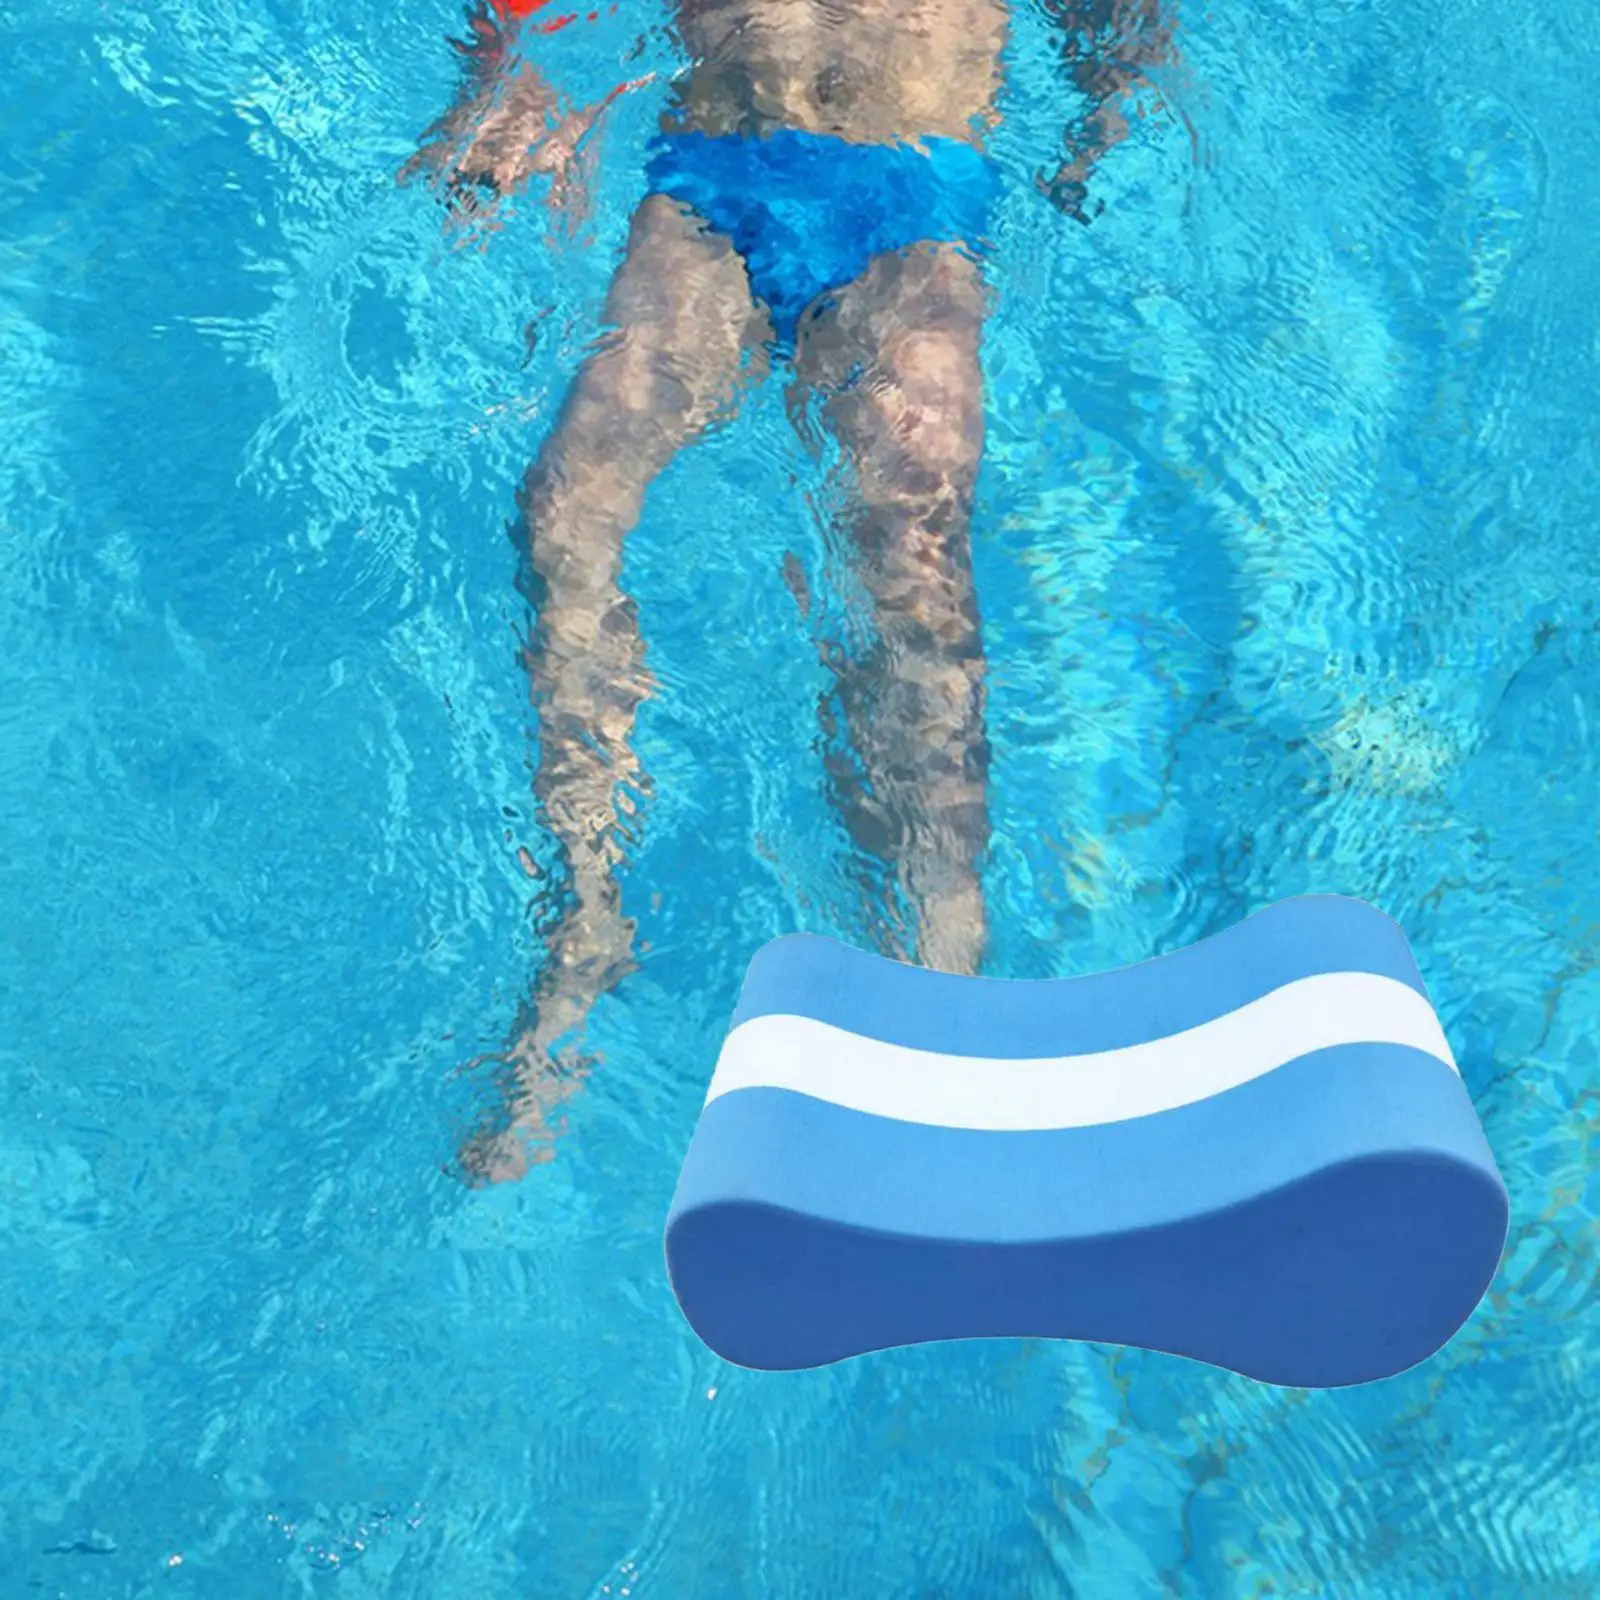 Pull Buoy Leg Floats Kickboard Body Strength Beginners Swimming Trainer Aid